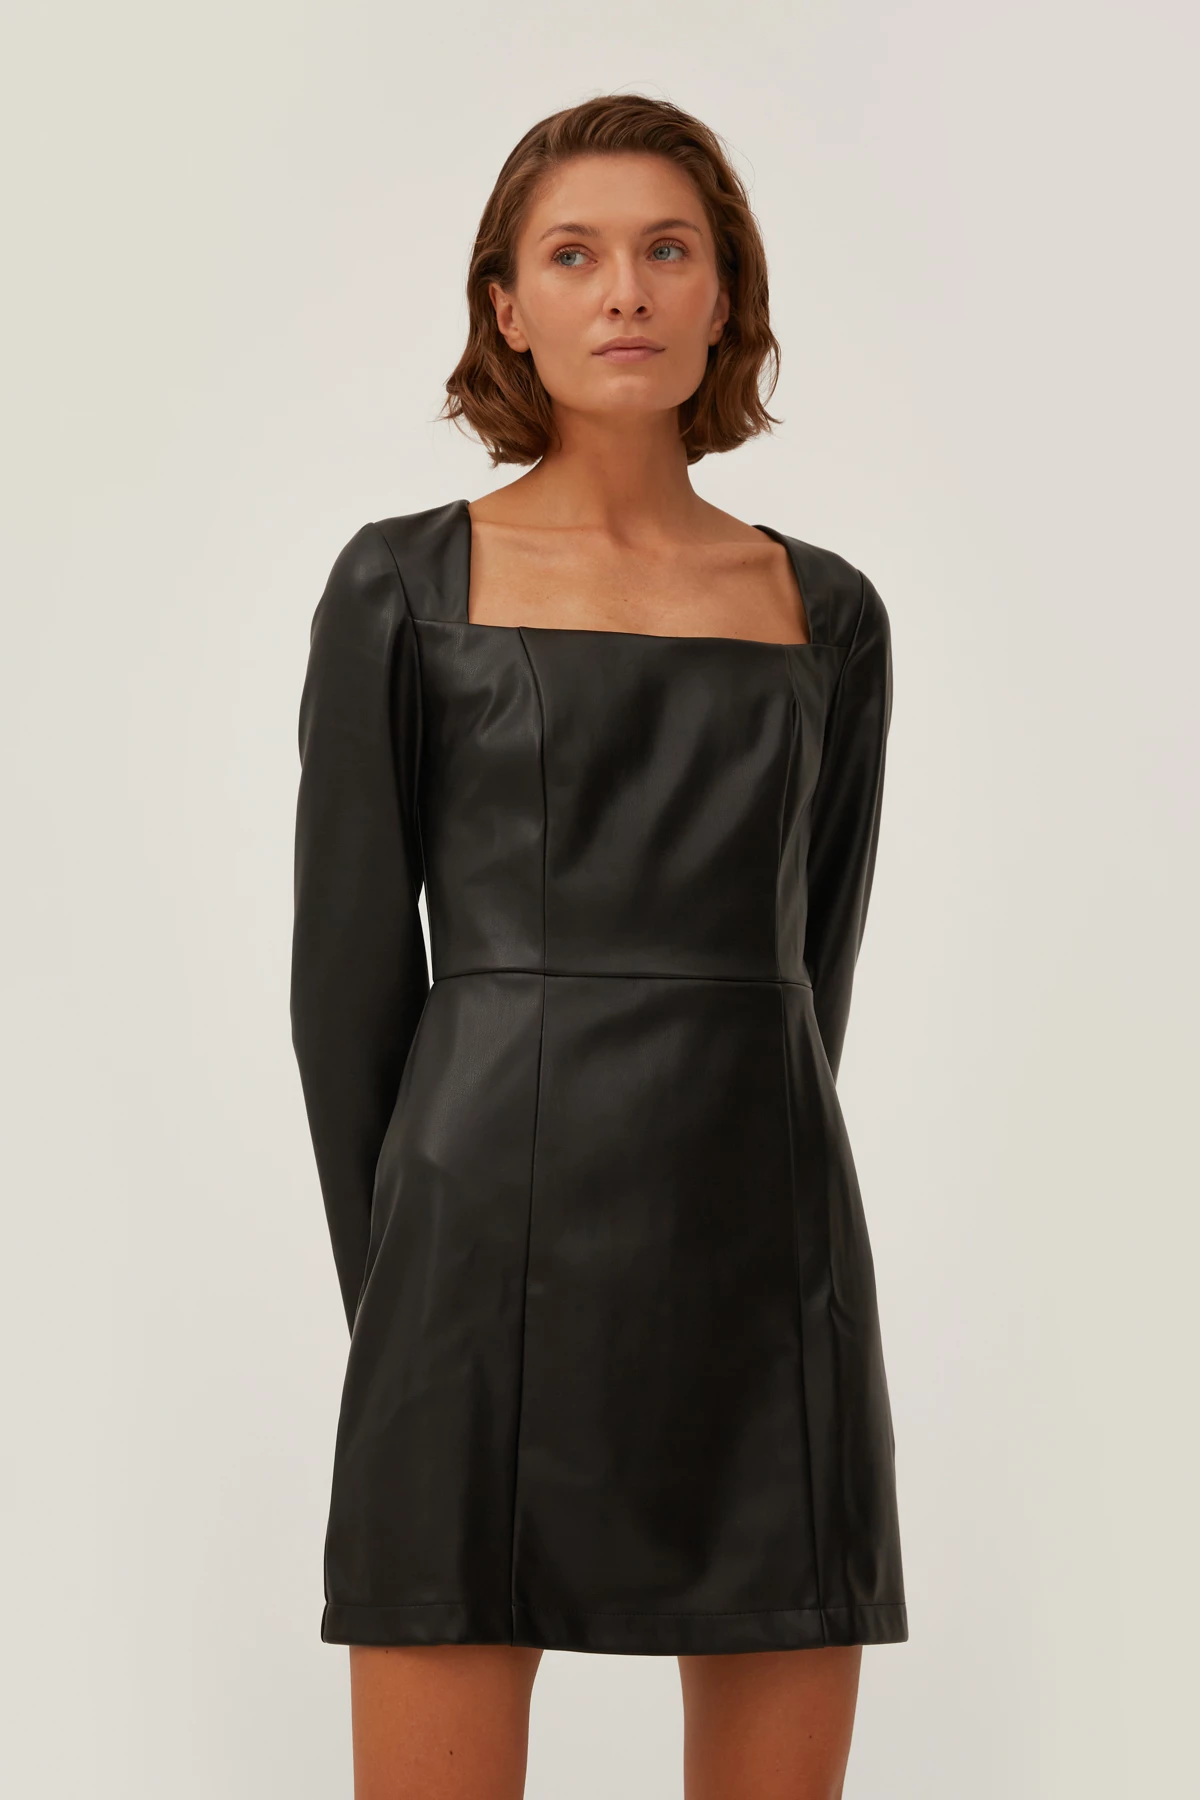 Black short dress made of eco-leather, photo 3